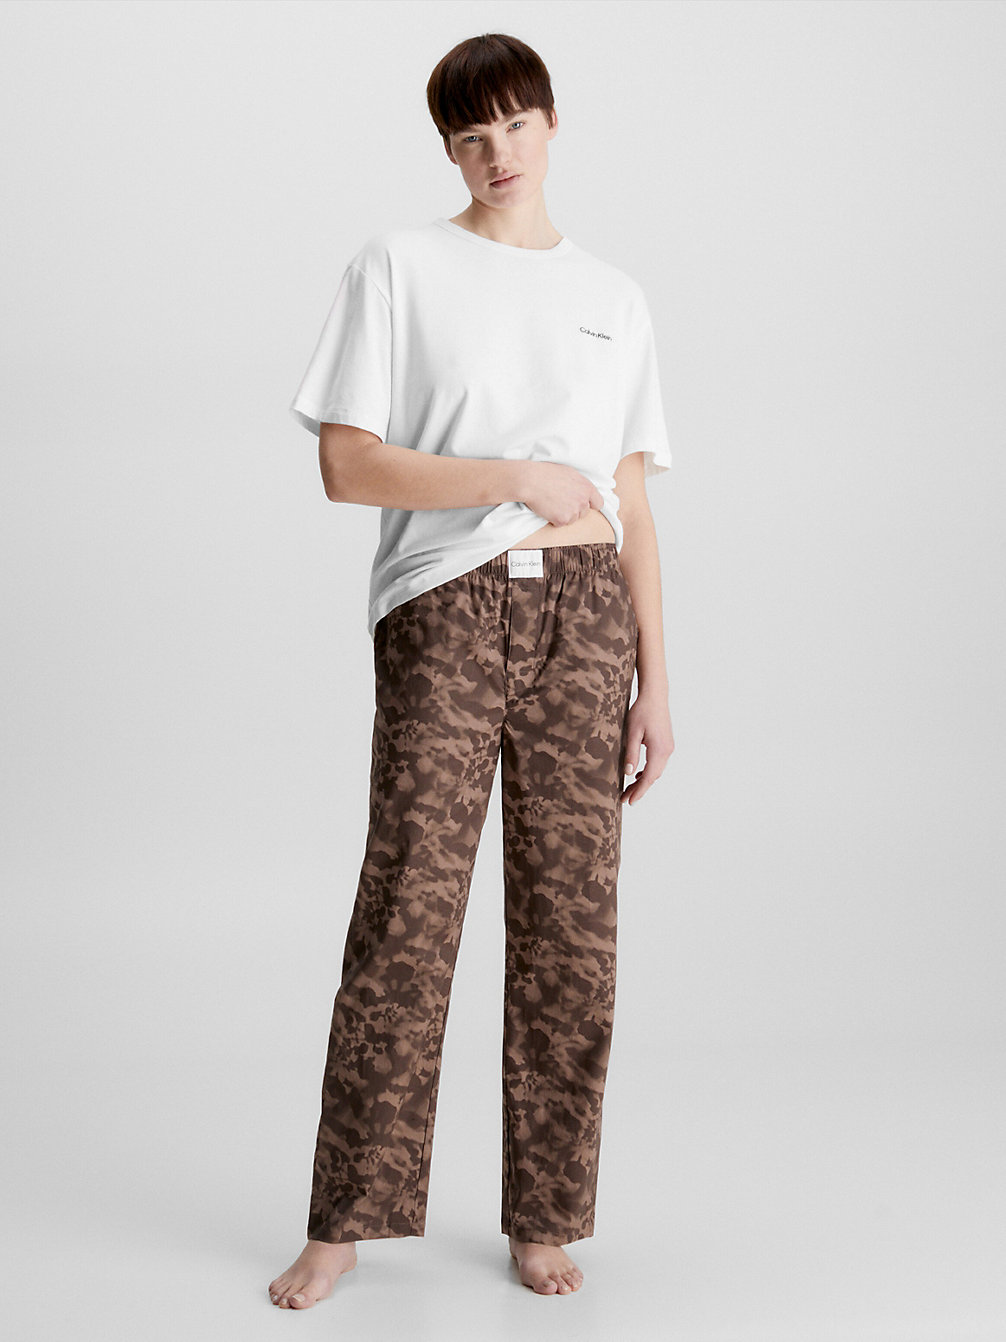 FLORAL SHADOWS/MAUVE Pyjama Set - Pj In A Bag undefined women Calvin Klein